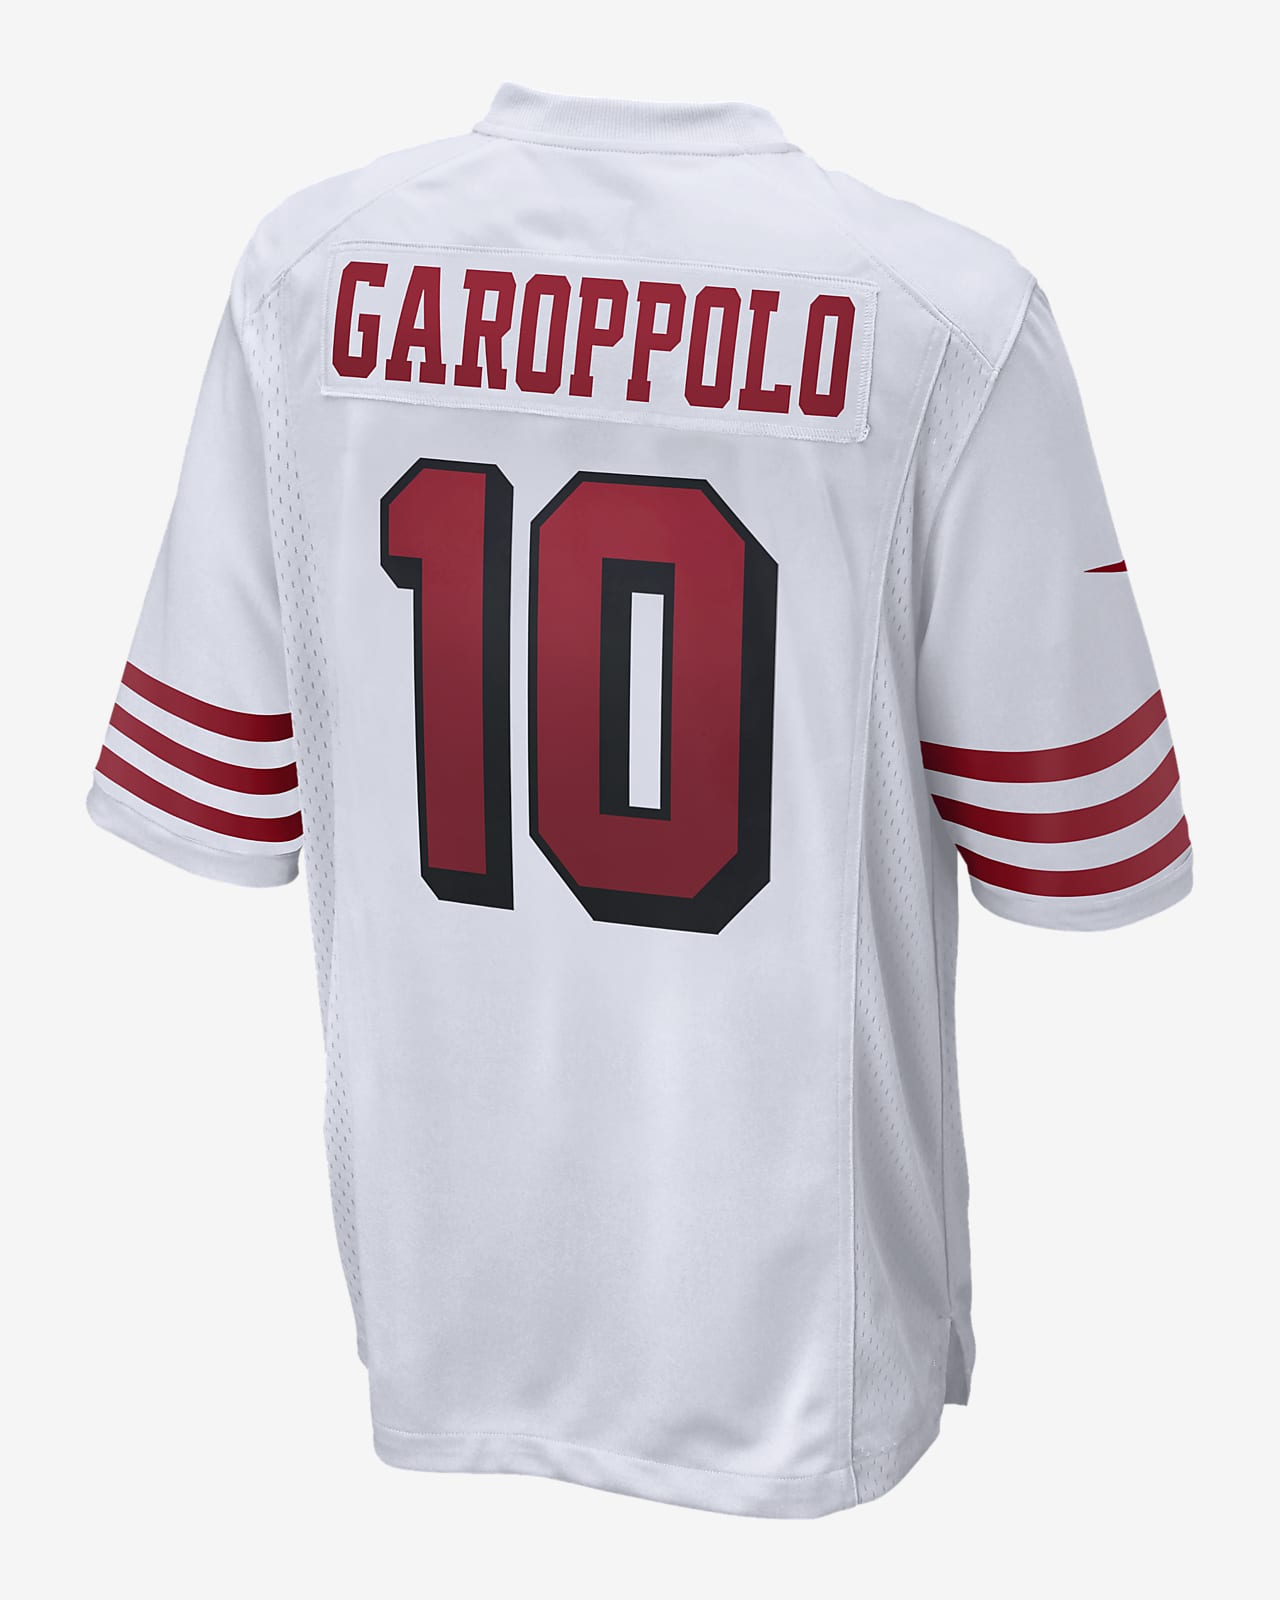 NFL San Francisco 49ers (Jimmy Garoppolo) Men's Game Football